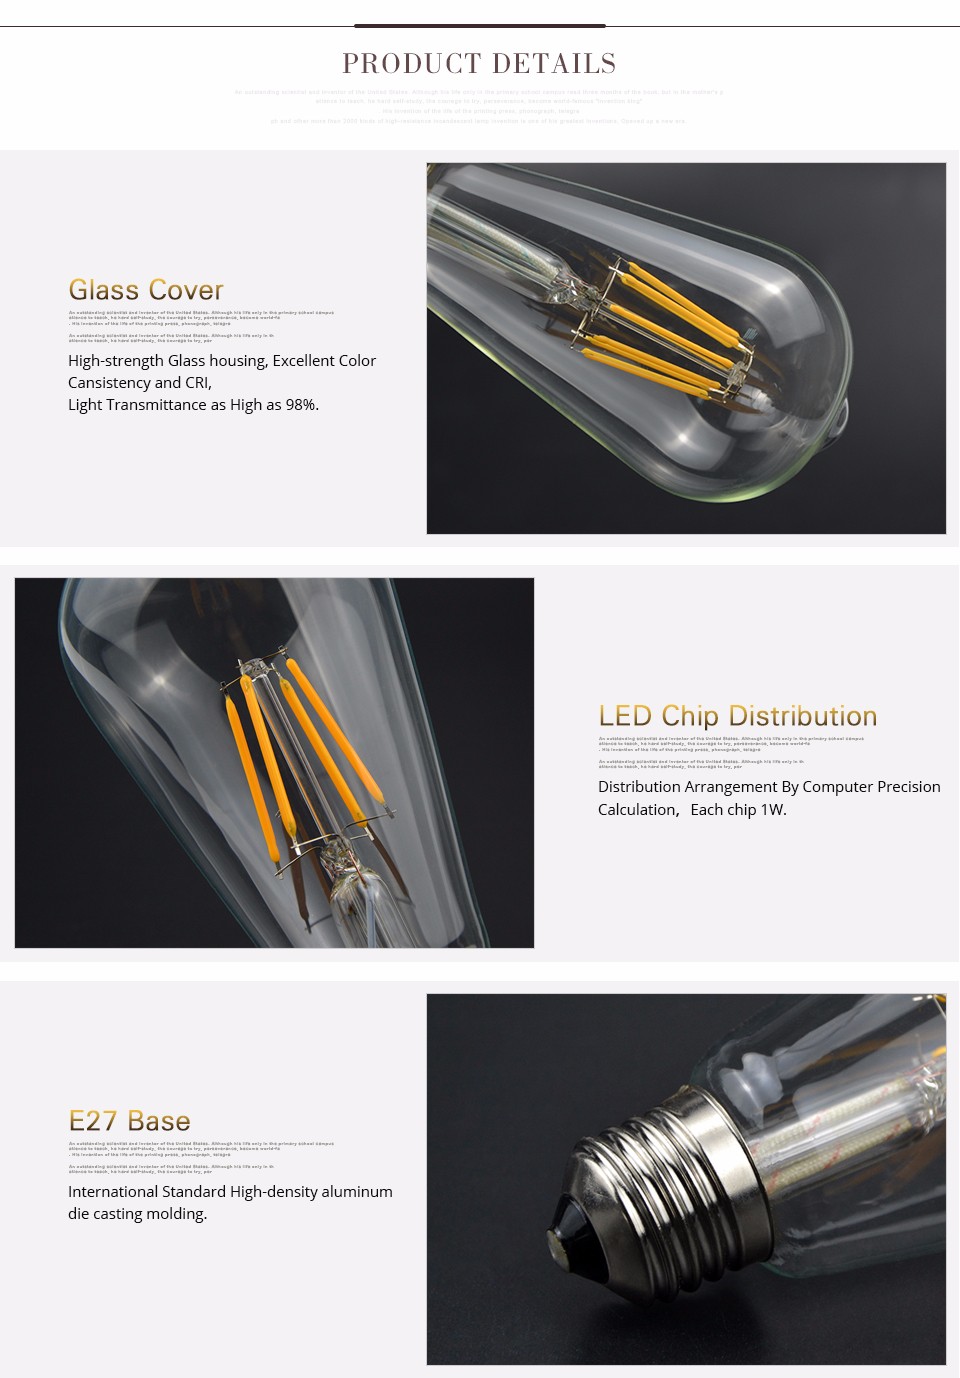 E27 COB LED Bulb light 110V 220V 85 265V 4W 6W 8W LED lamp Retro Edison Filament lamp home lighting